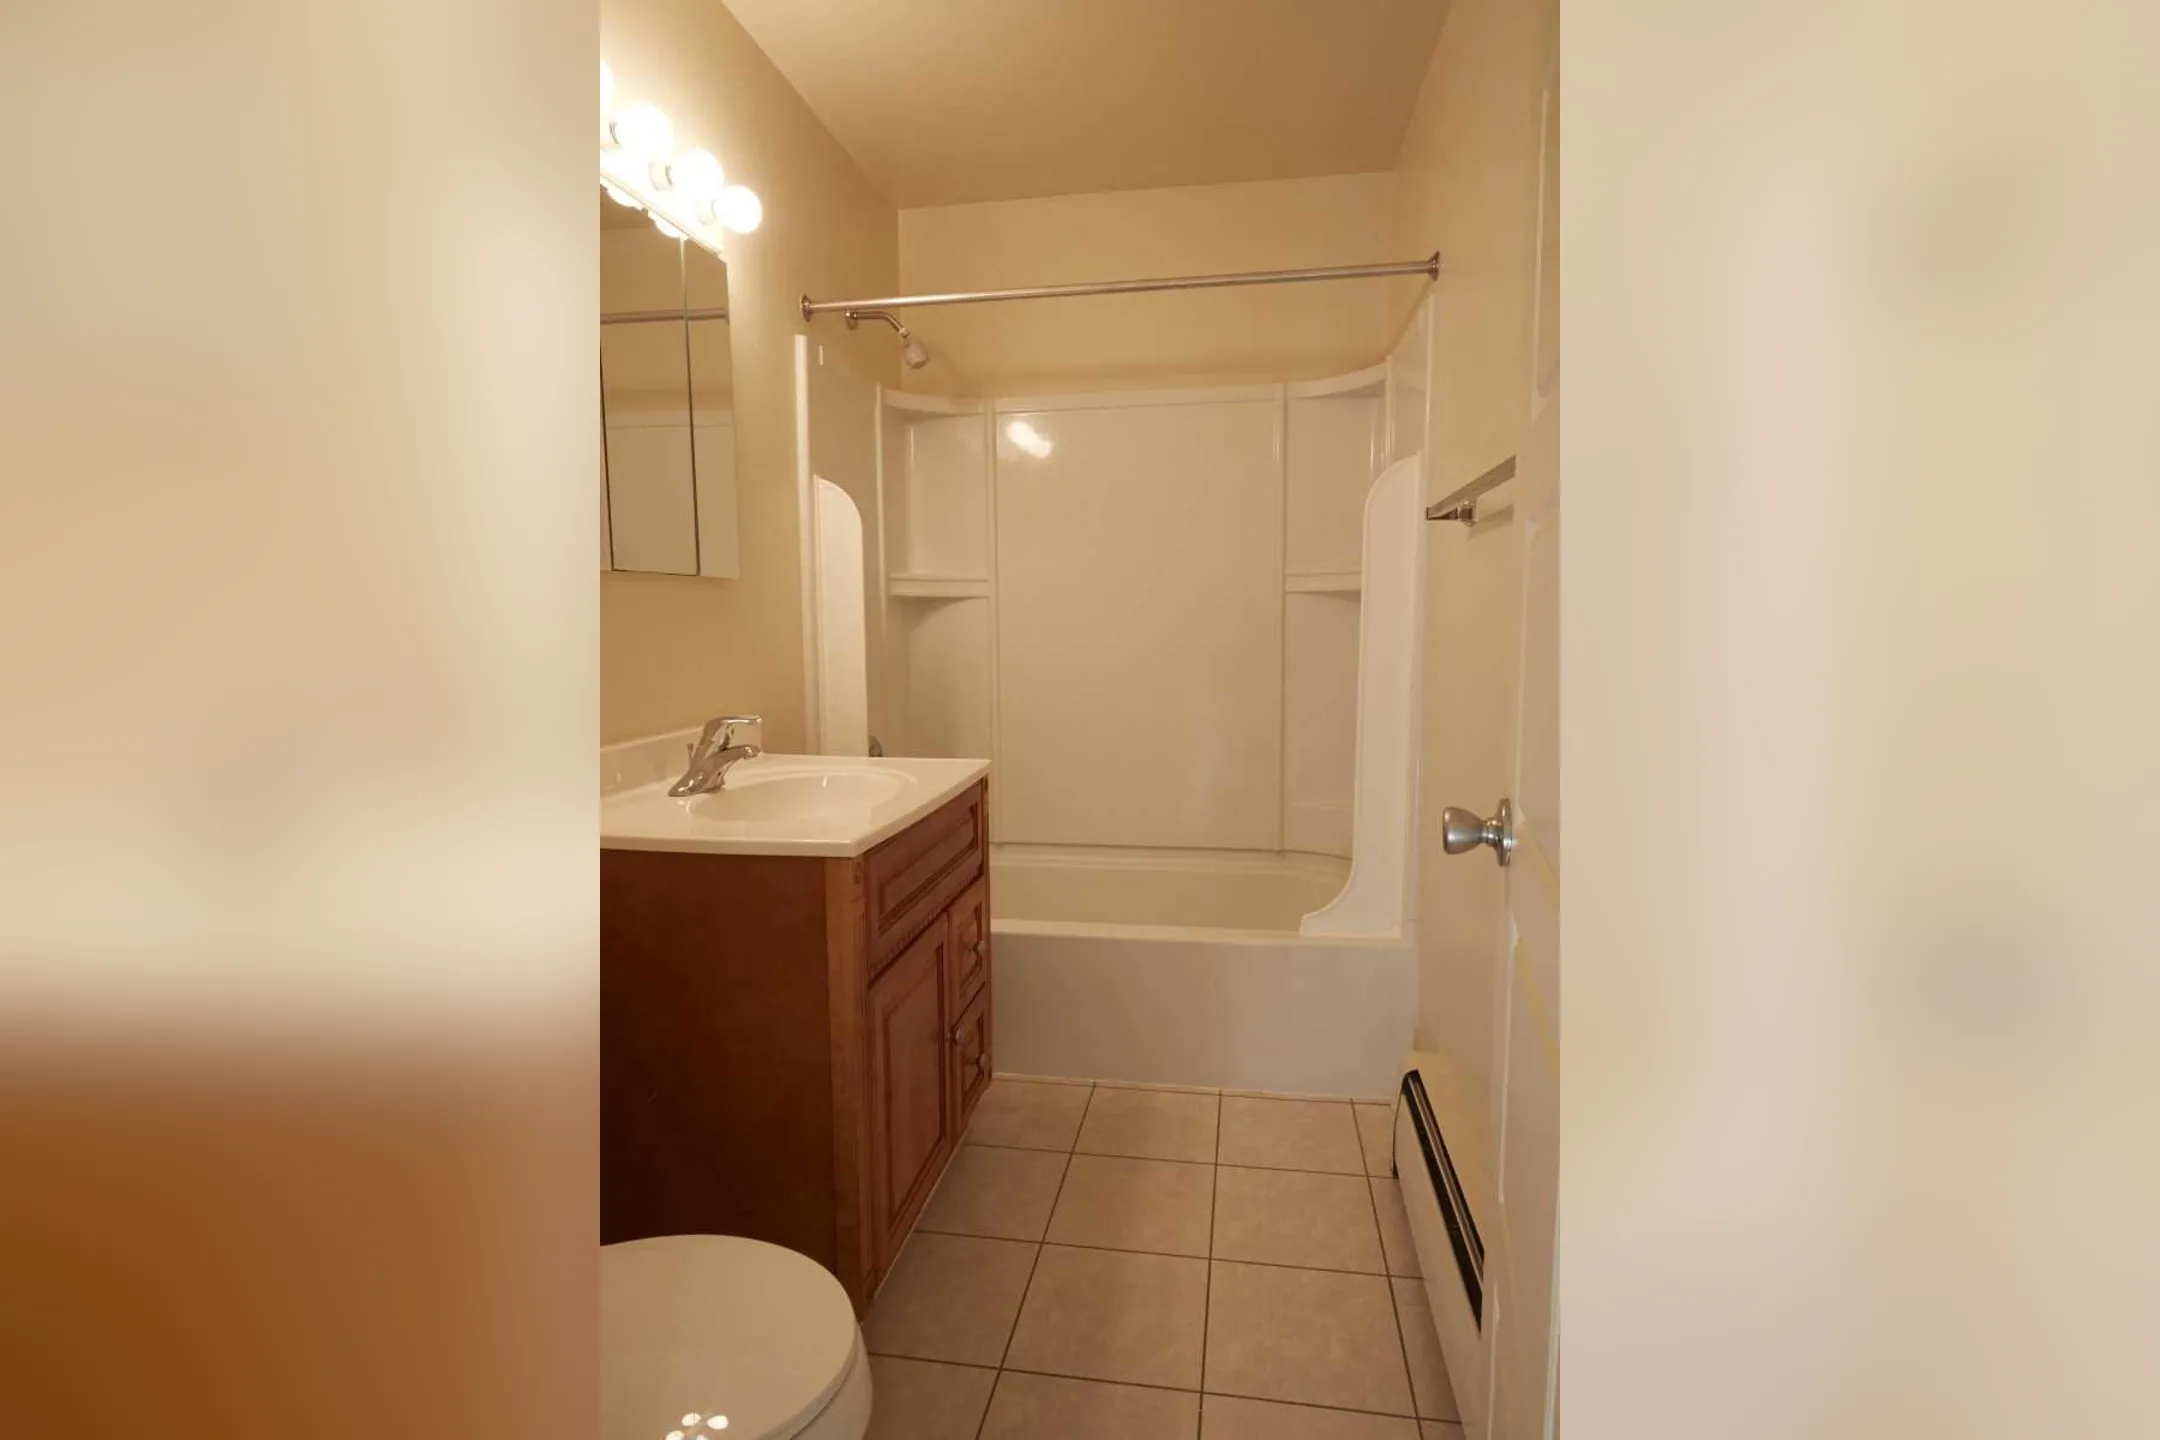 Bathroom - Tor View Village Apartments - Garnerville, NY